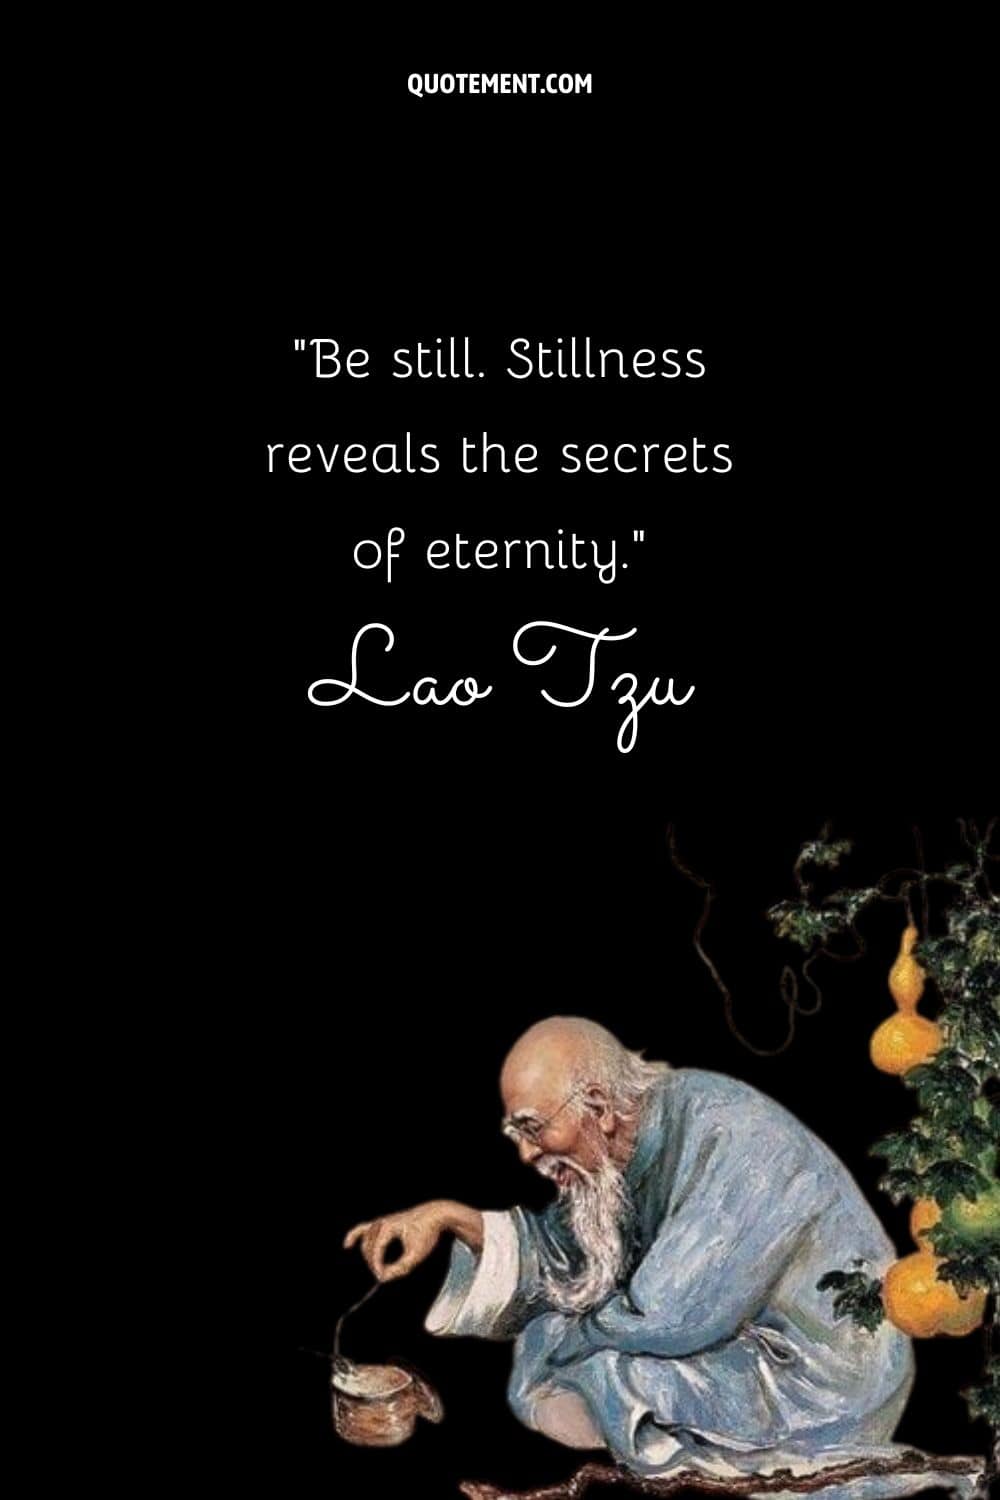 Be still. Stillness reveals the secrets of eternity